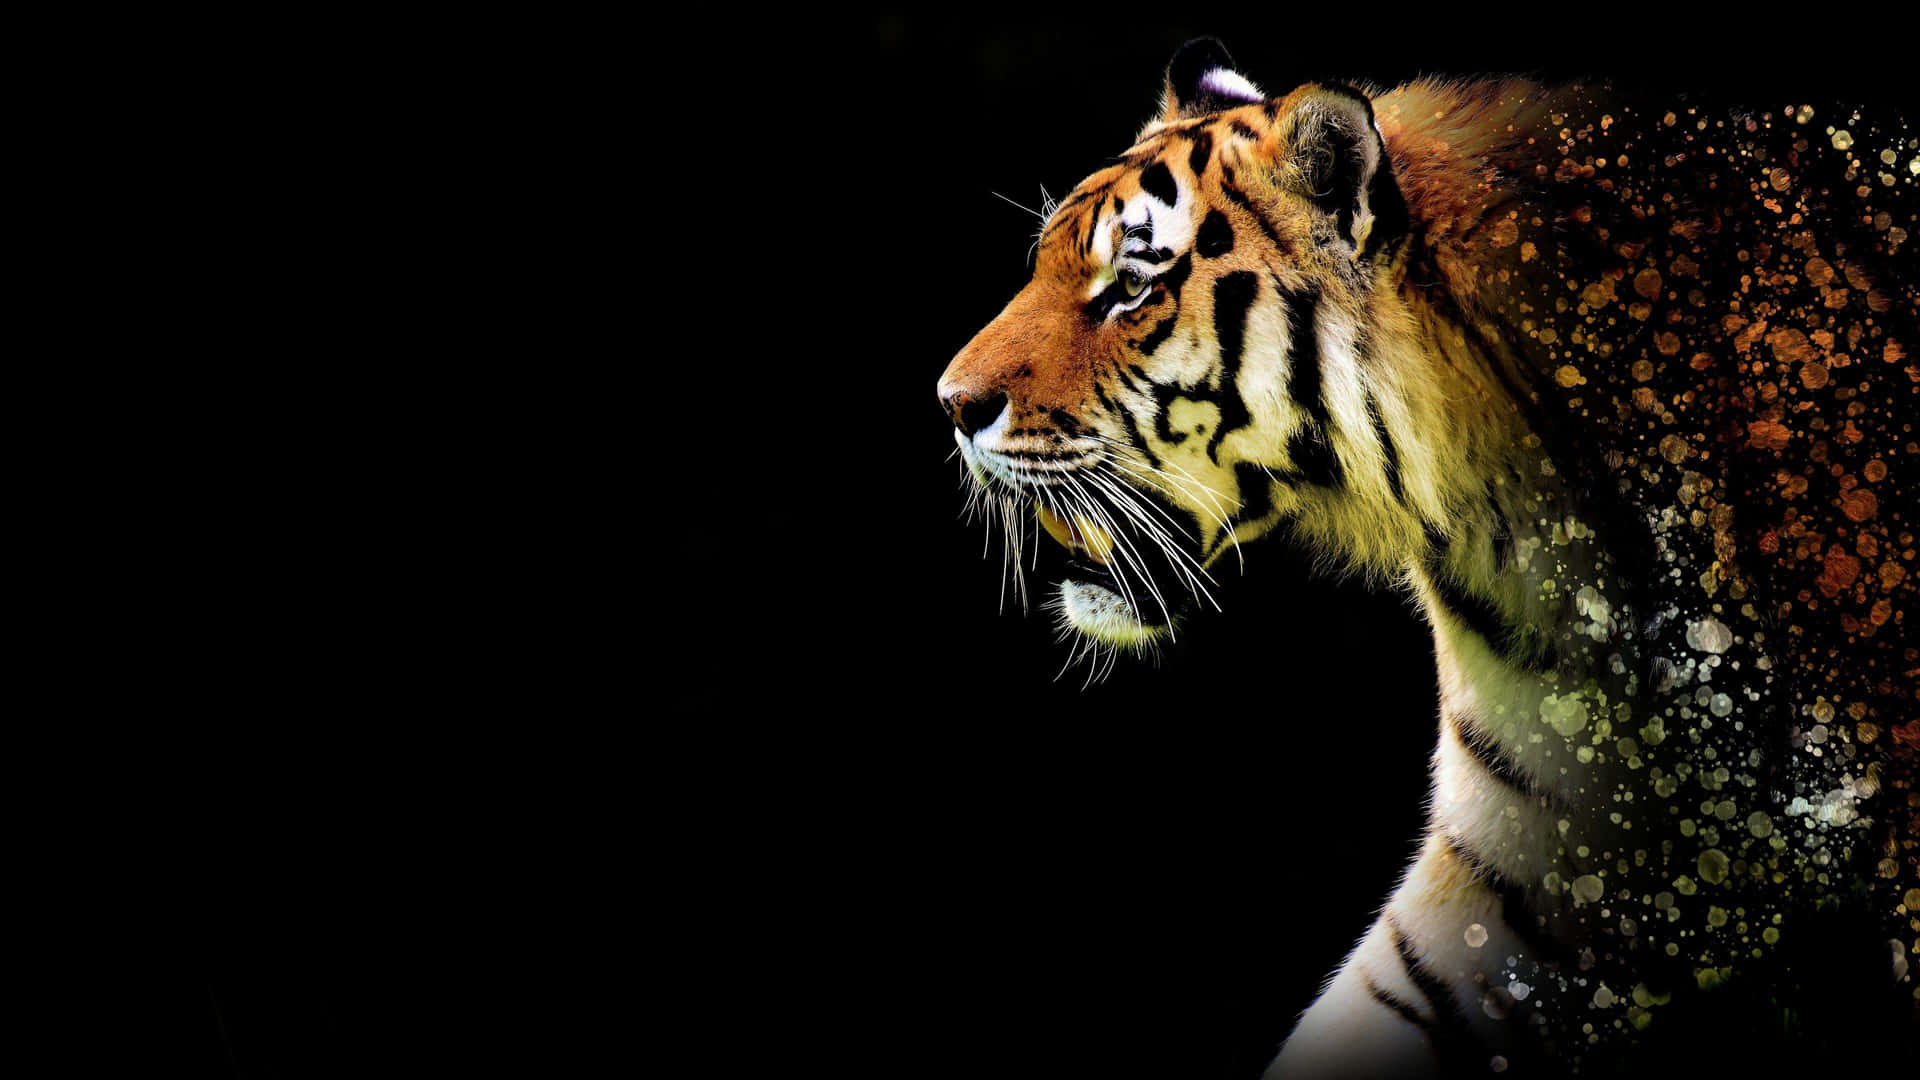 Majestic Tiger Profile Against Black Background.jpg Wallpaper